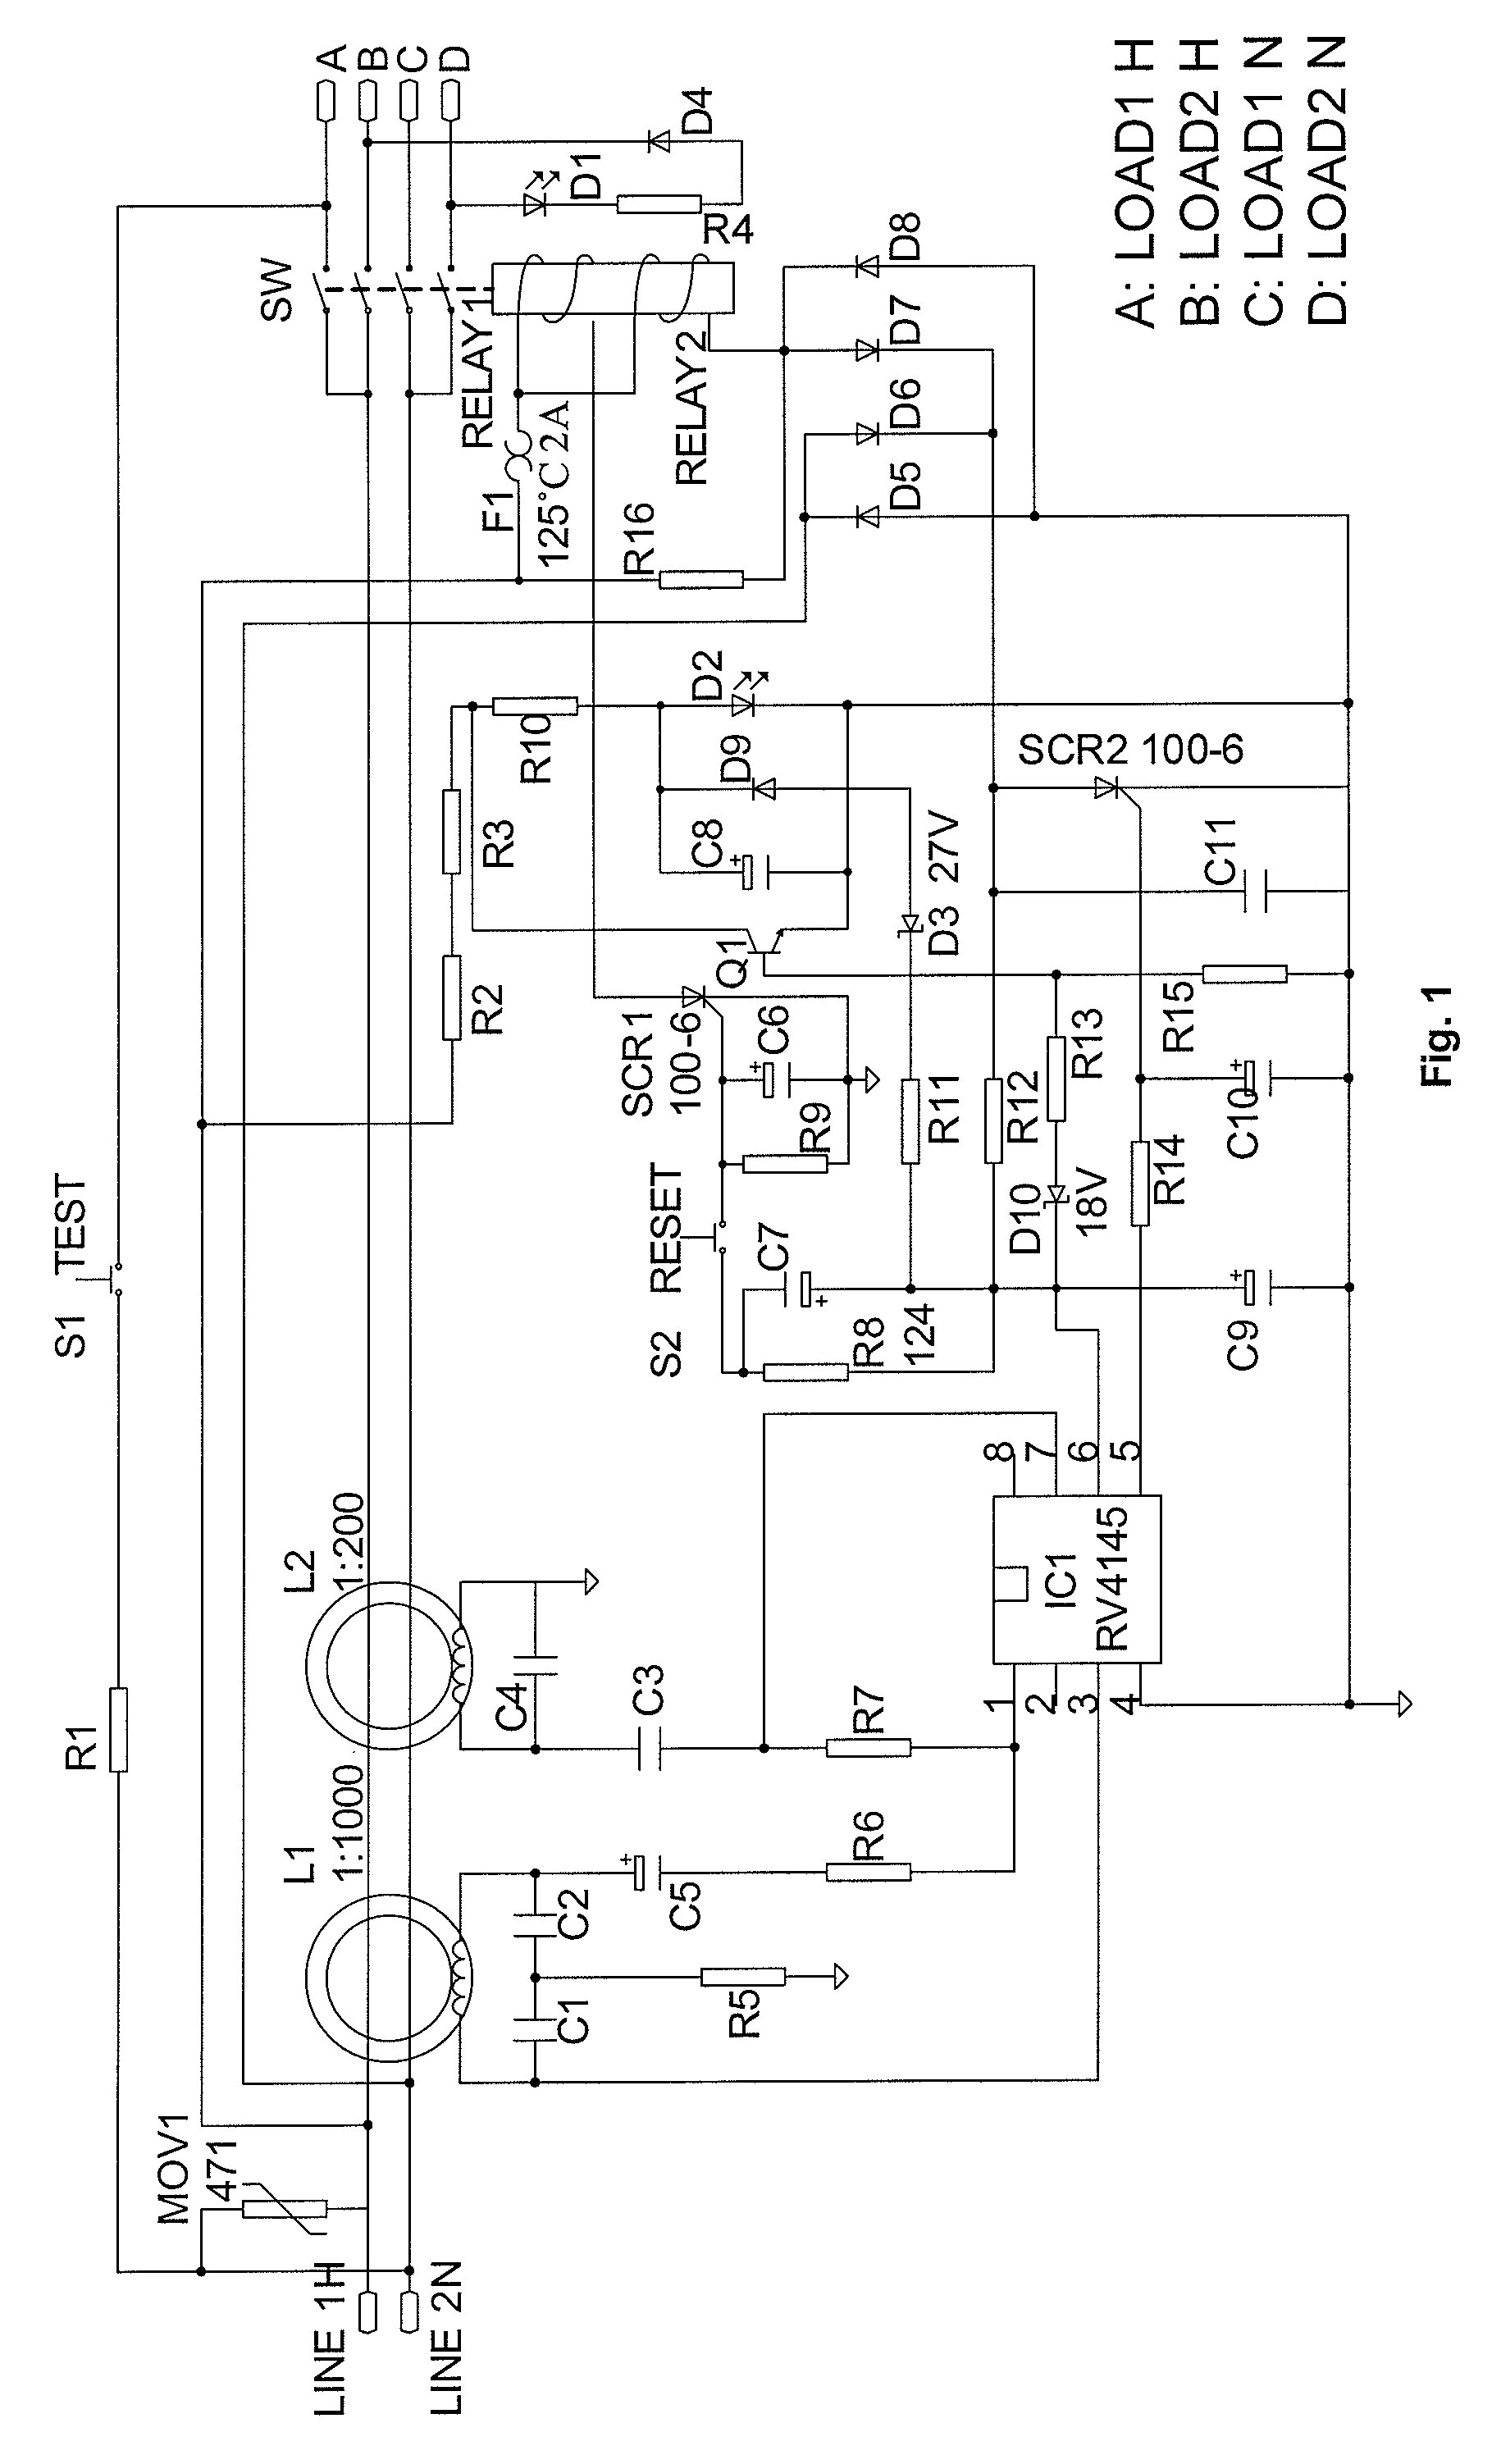 Ground fault circuit interrupter control circuit